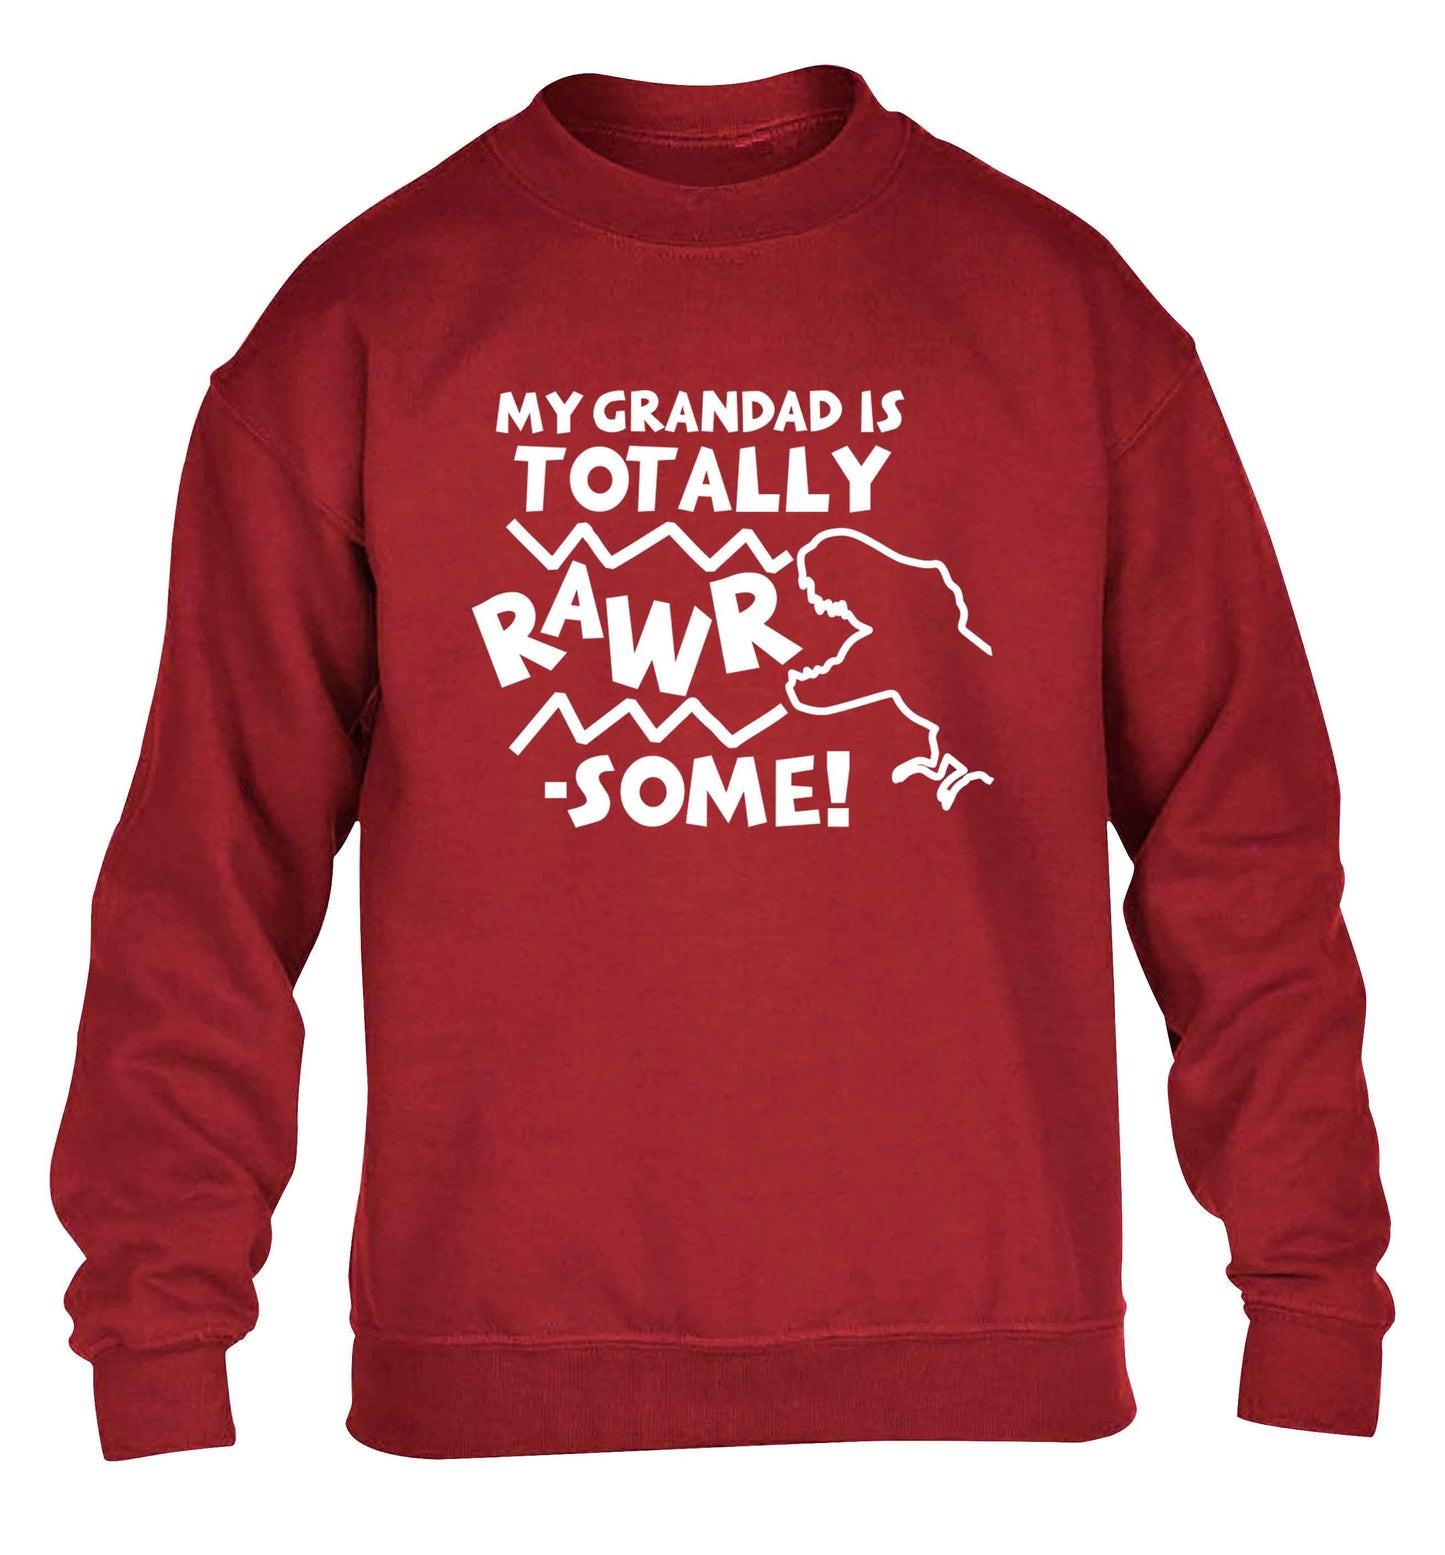 My grandad is totally rawrsome children's grey sweater 12-13 Years